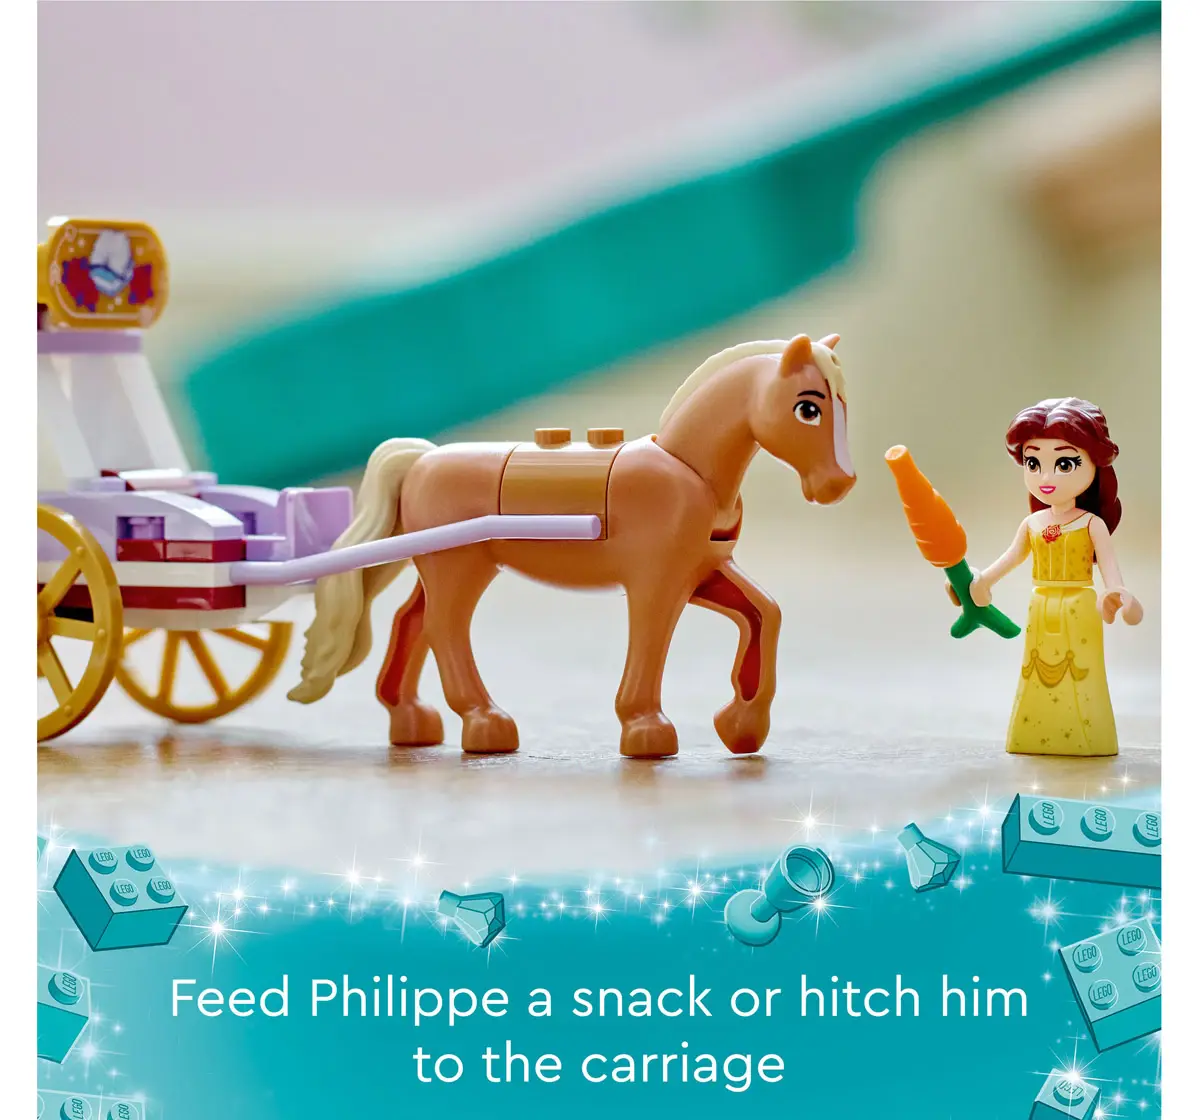 Lego Disney Princess BelleS Storytime Horse Carriage 43233 Multicolour For Kids Ages 5Y+ (62 Pieces) 